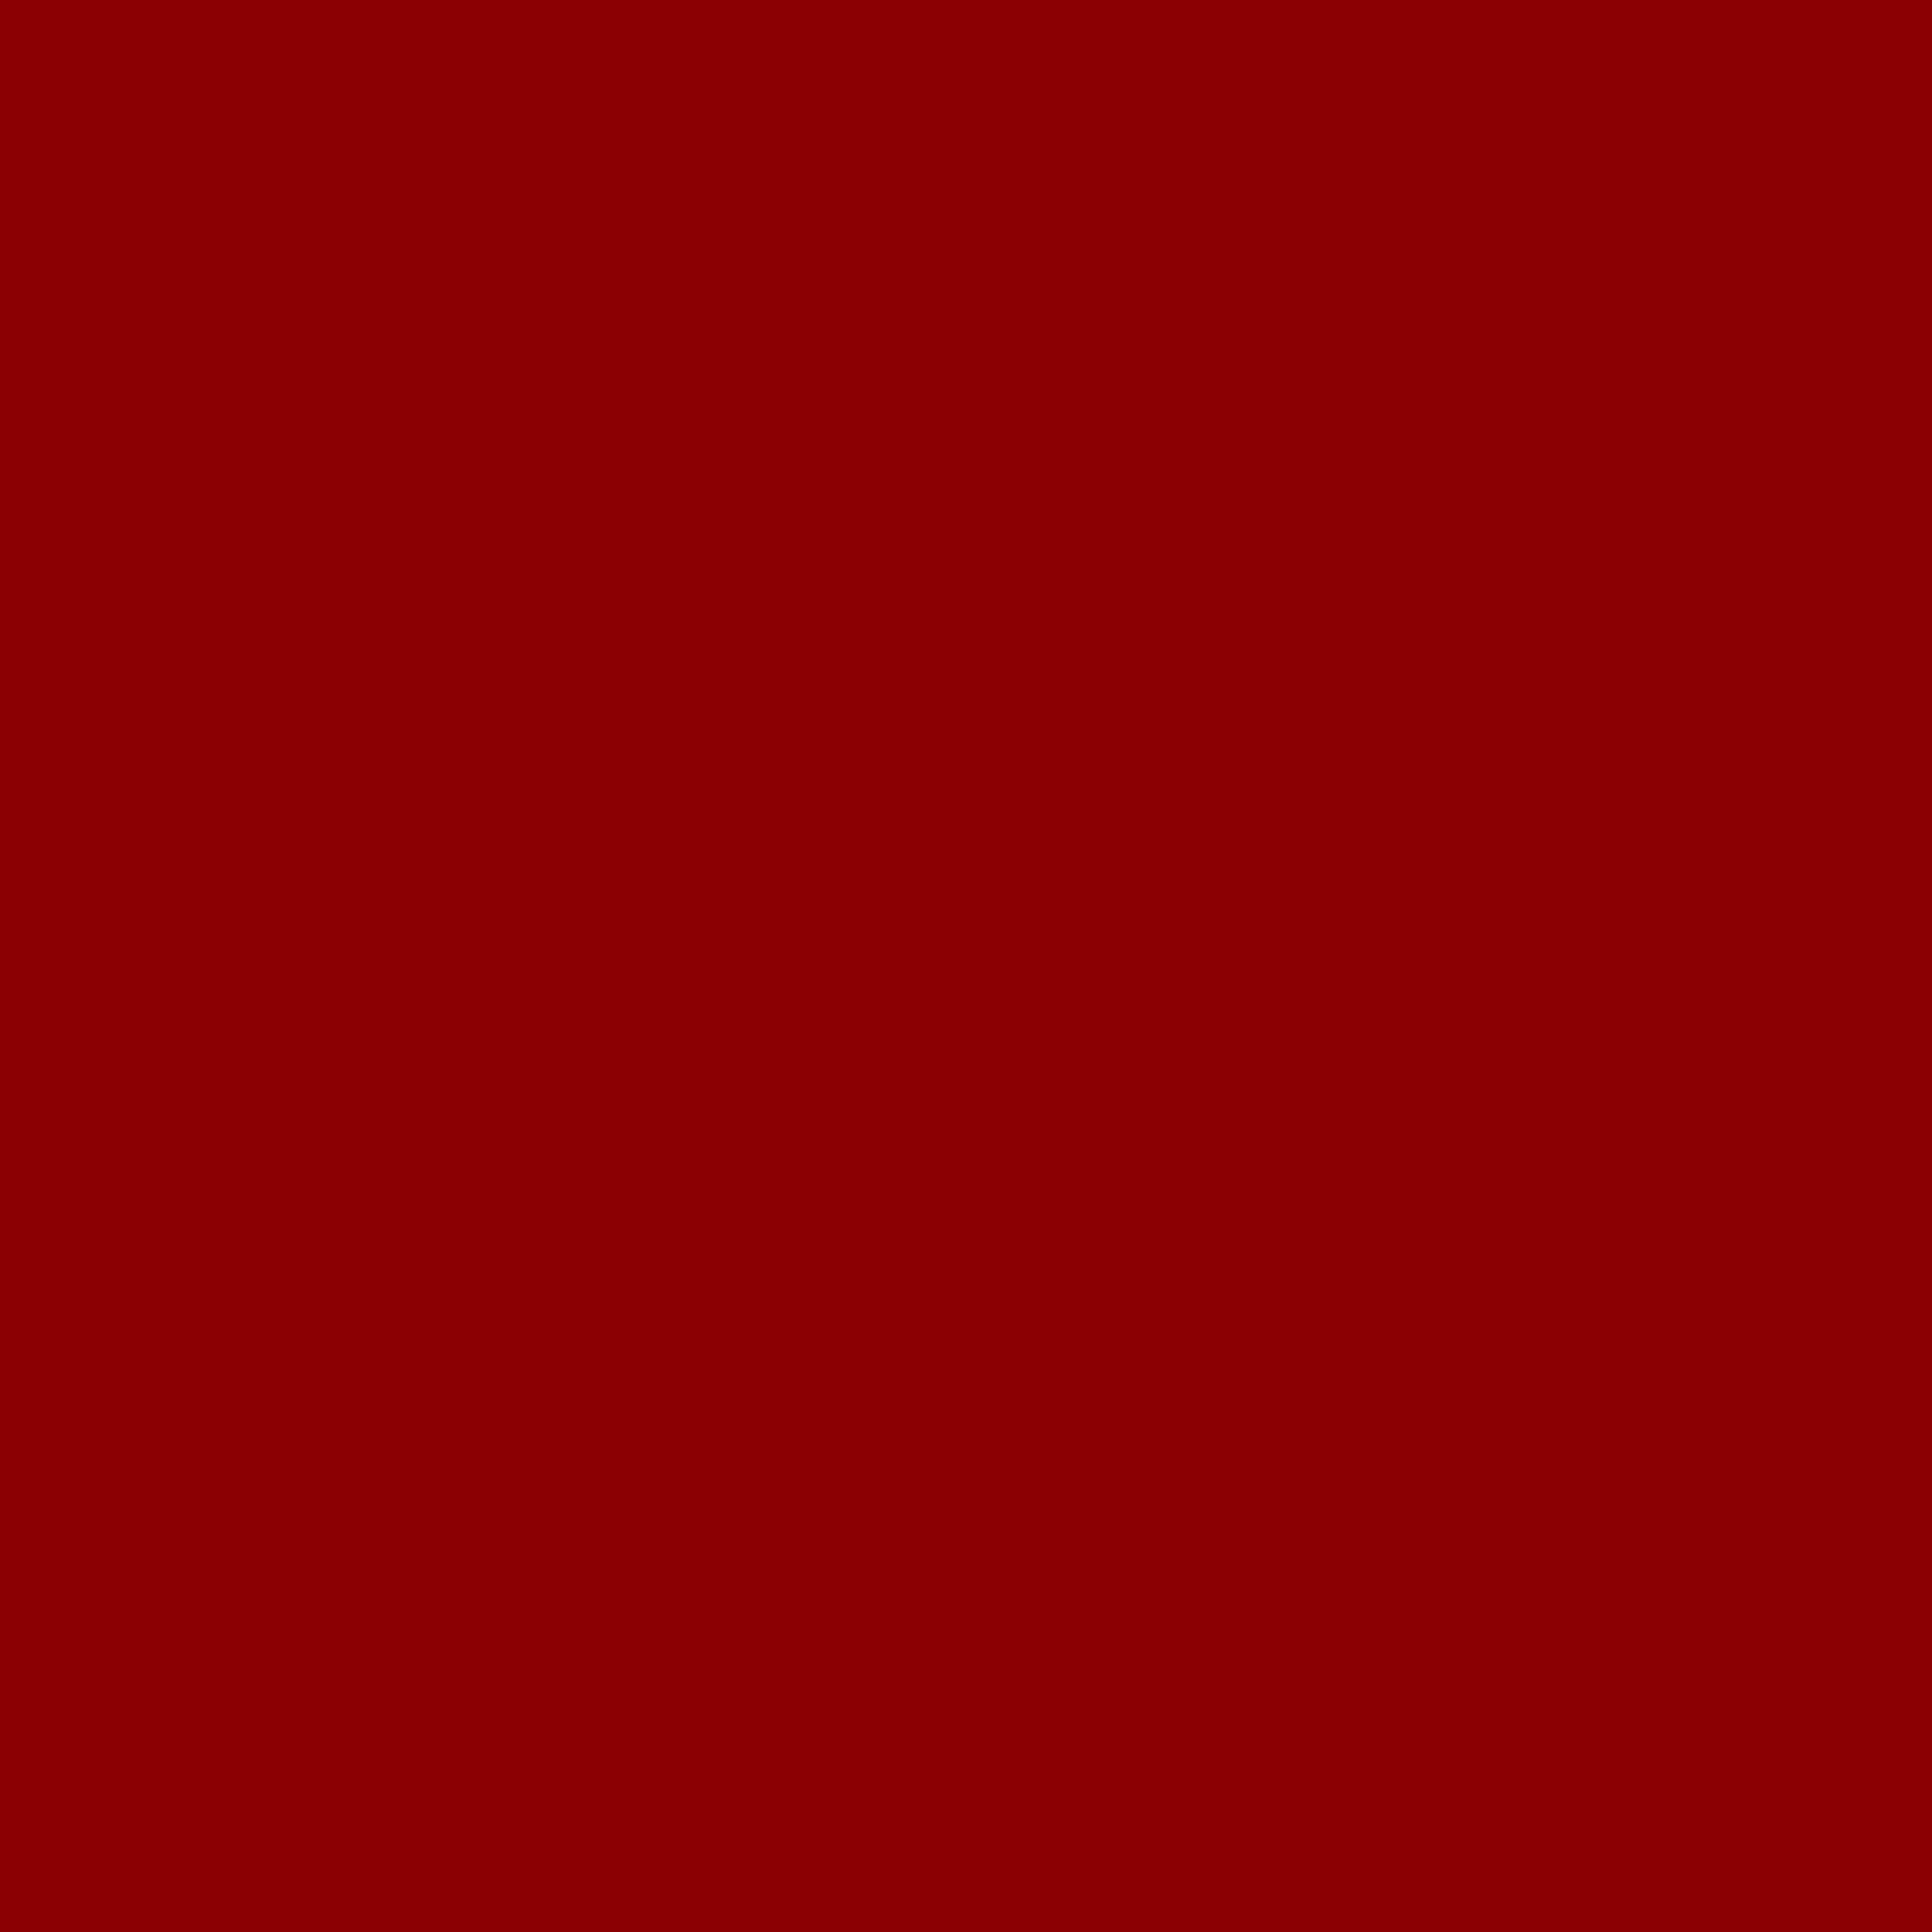 Dark Red Background Image Impremedia